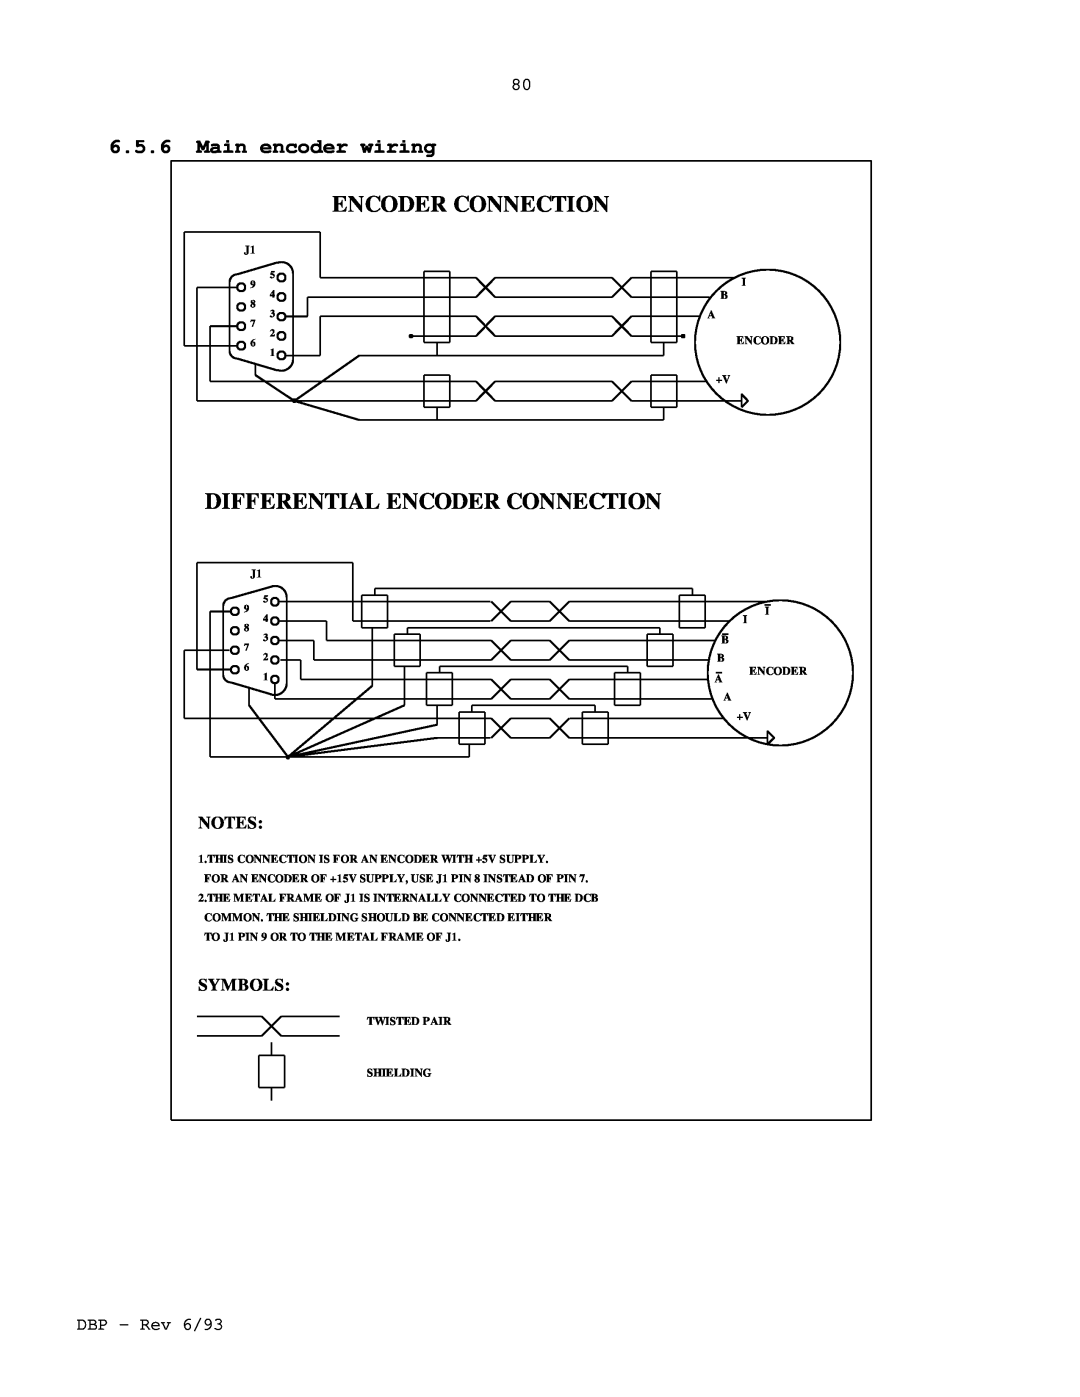 Elmo DBP SERIES manual Differential Encoder Connection, 6.5.6Main encoder wiring, Symbols 